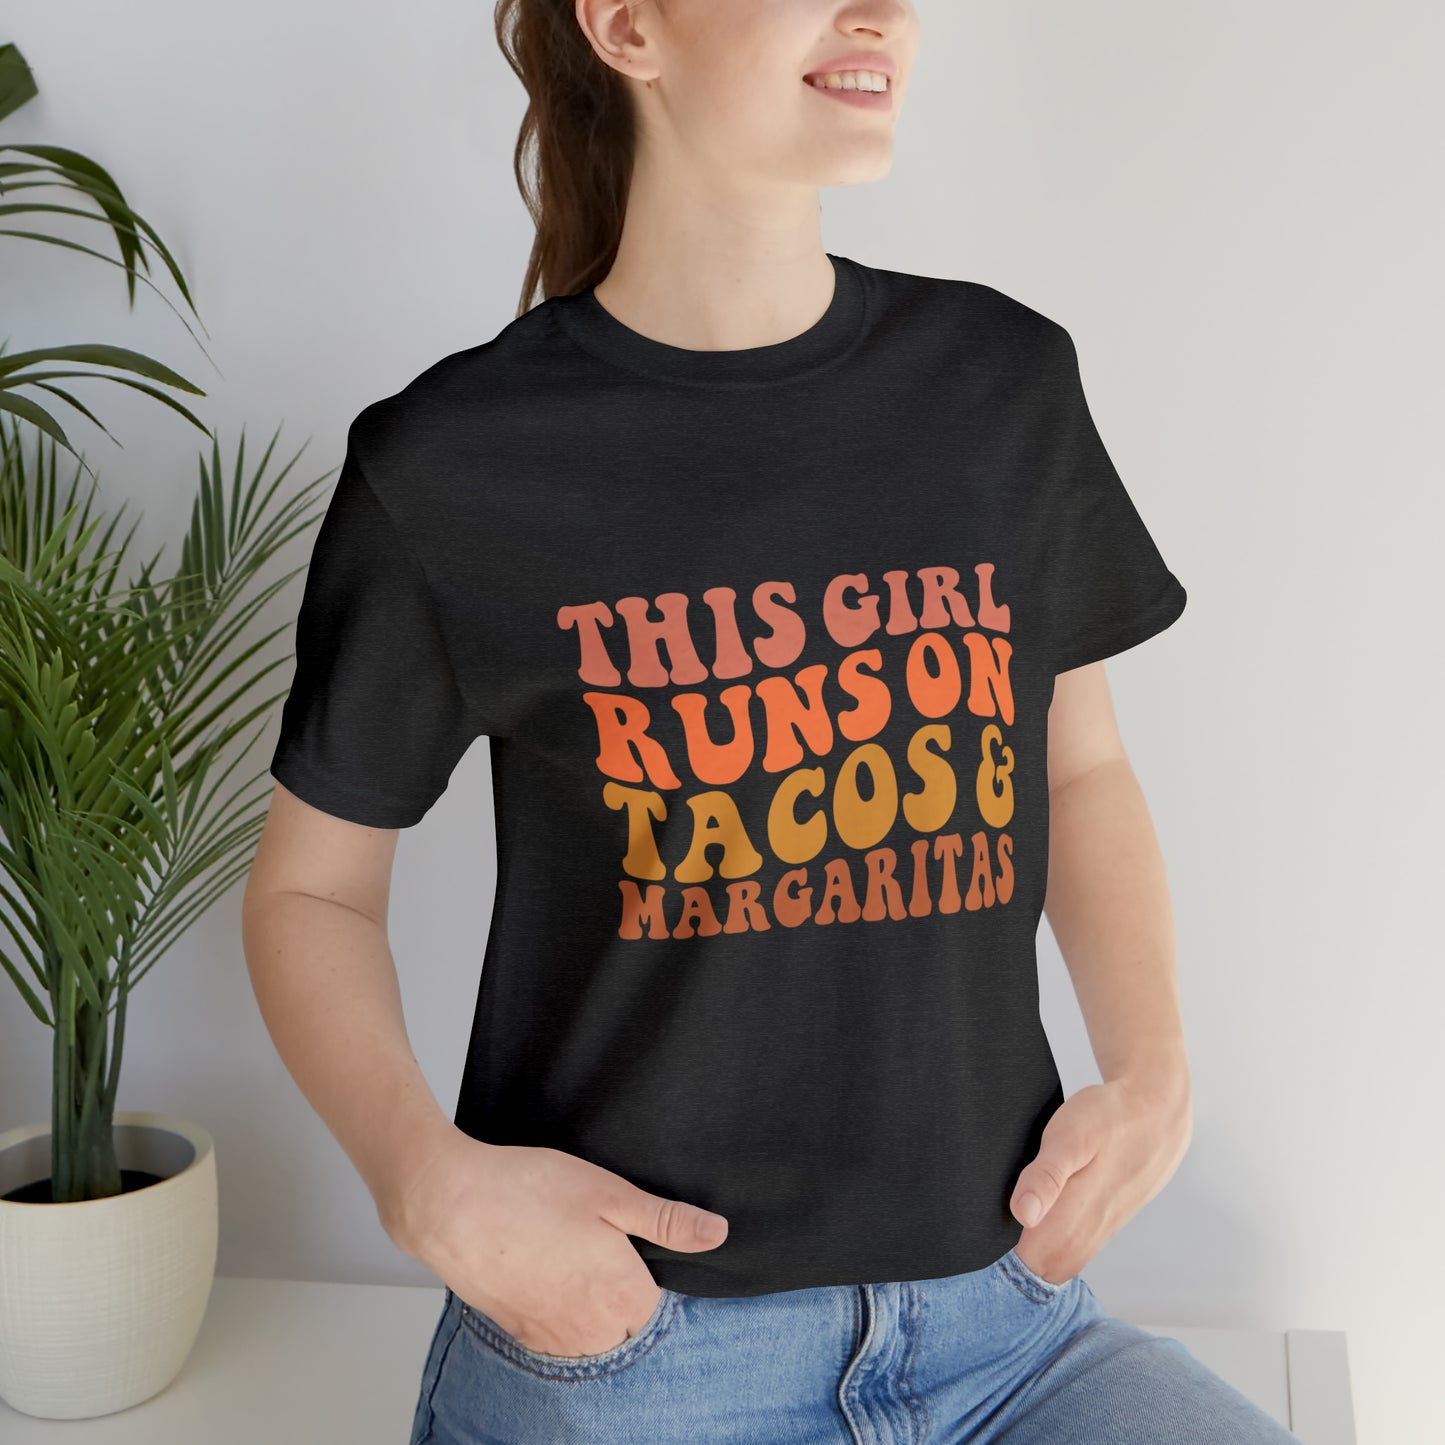 This girl runs on tacos - Jersey Short Sleeve T-Shirt